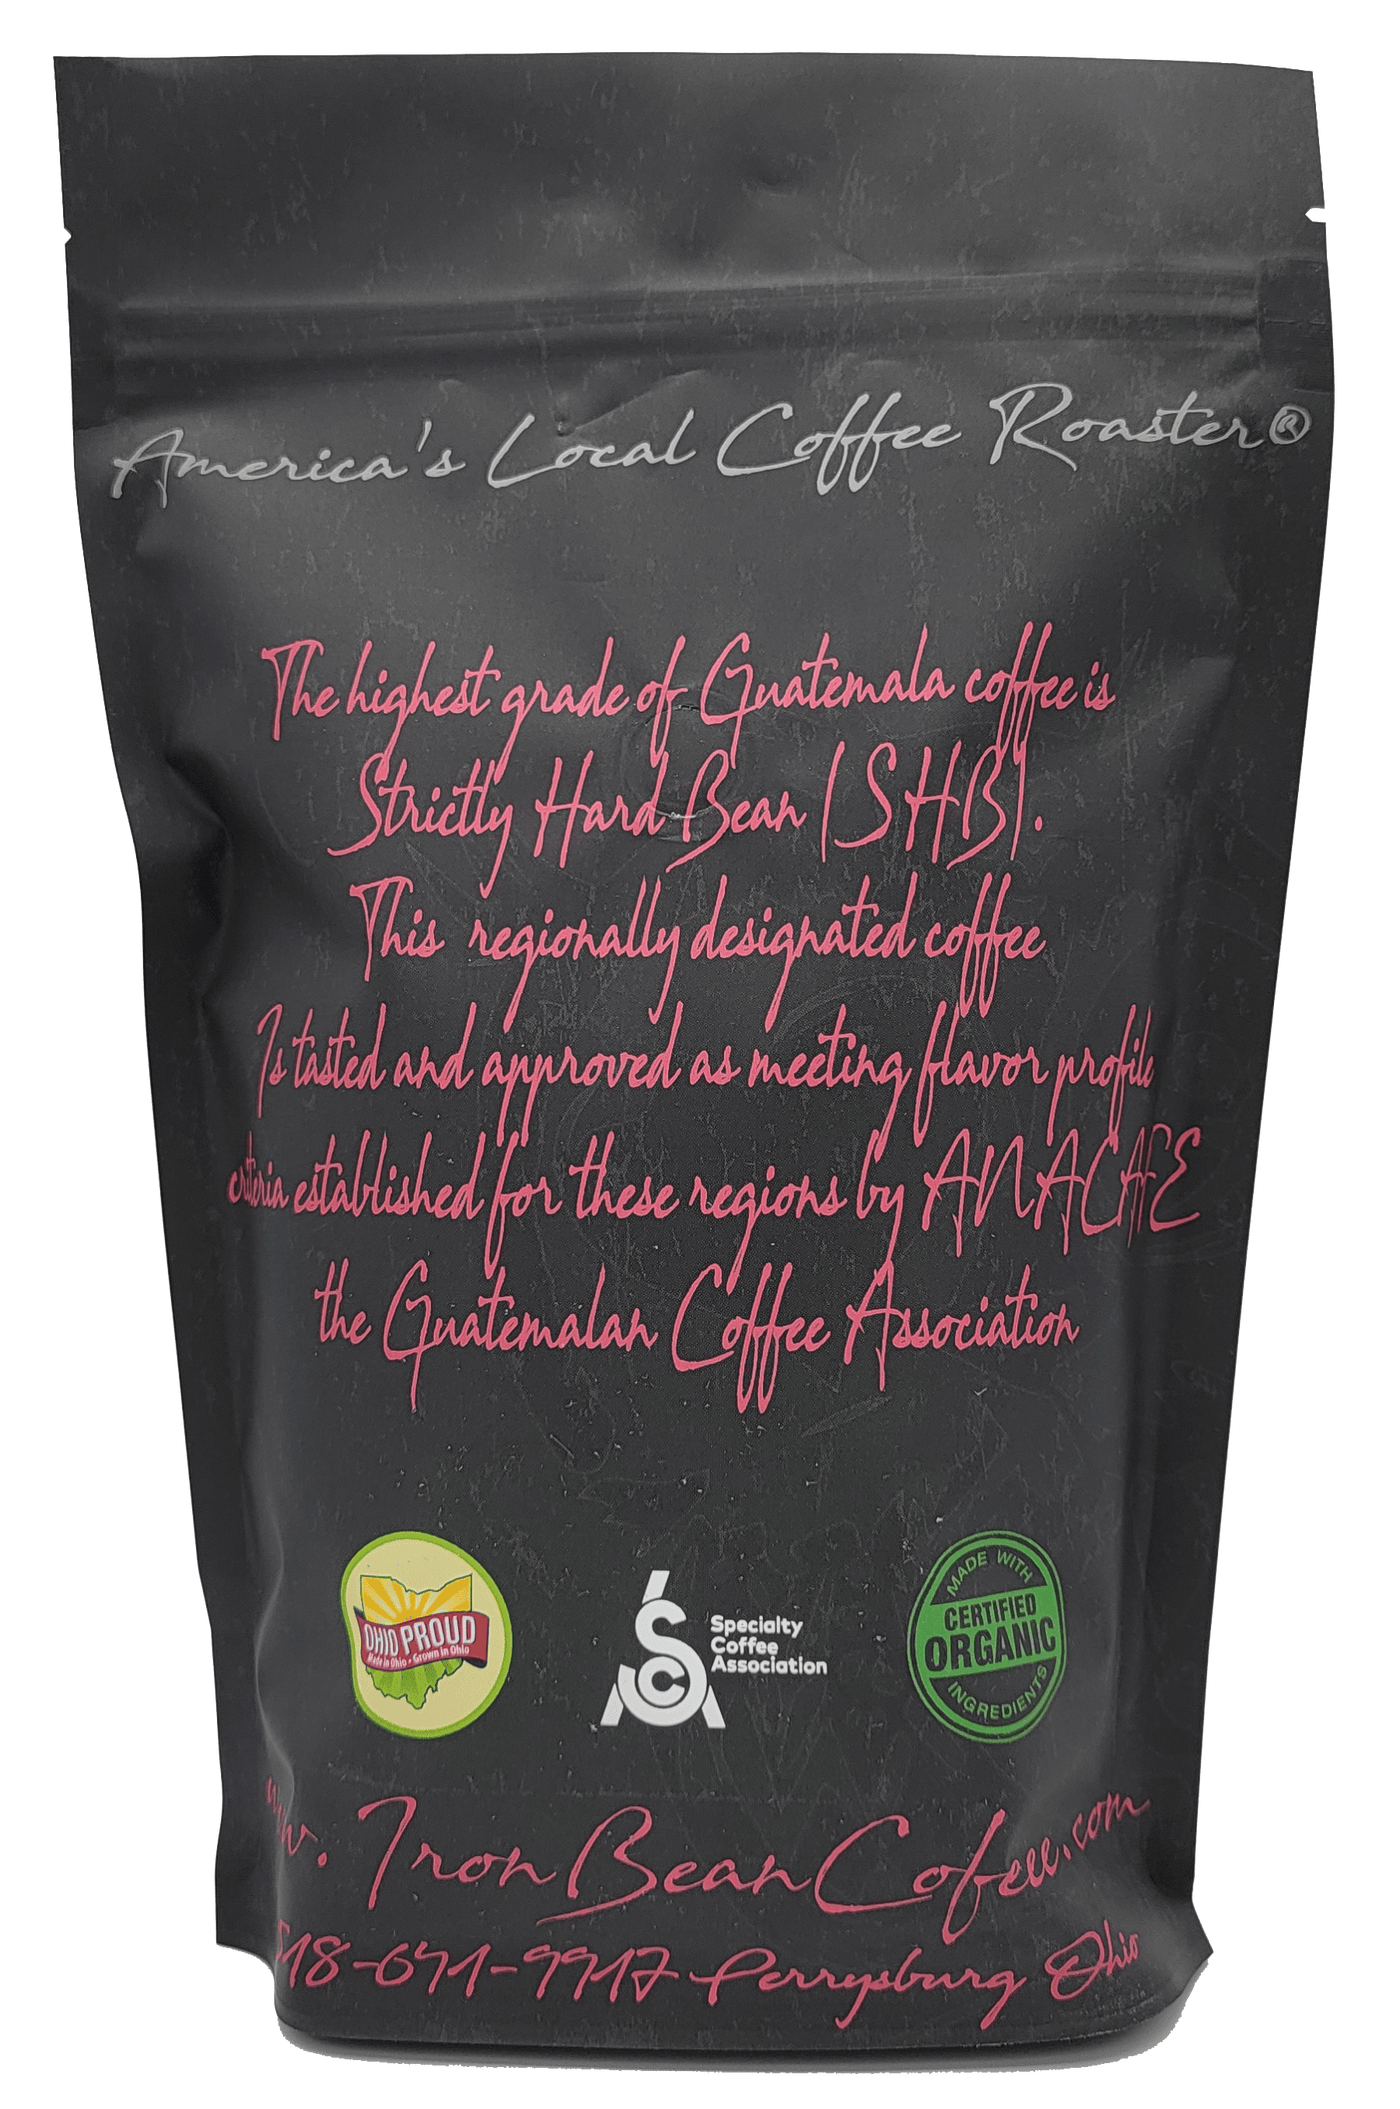 Guatemalan Antigua  - Limited Edition - Iron Bean Coffee Company